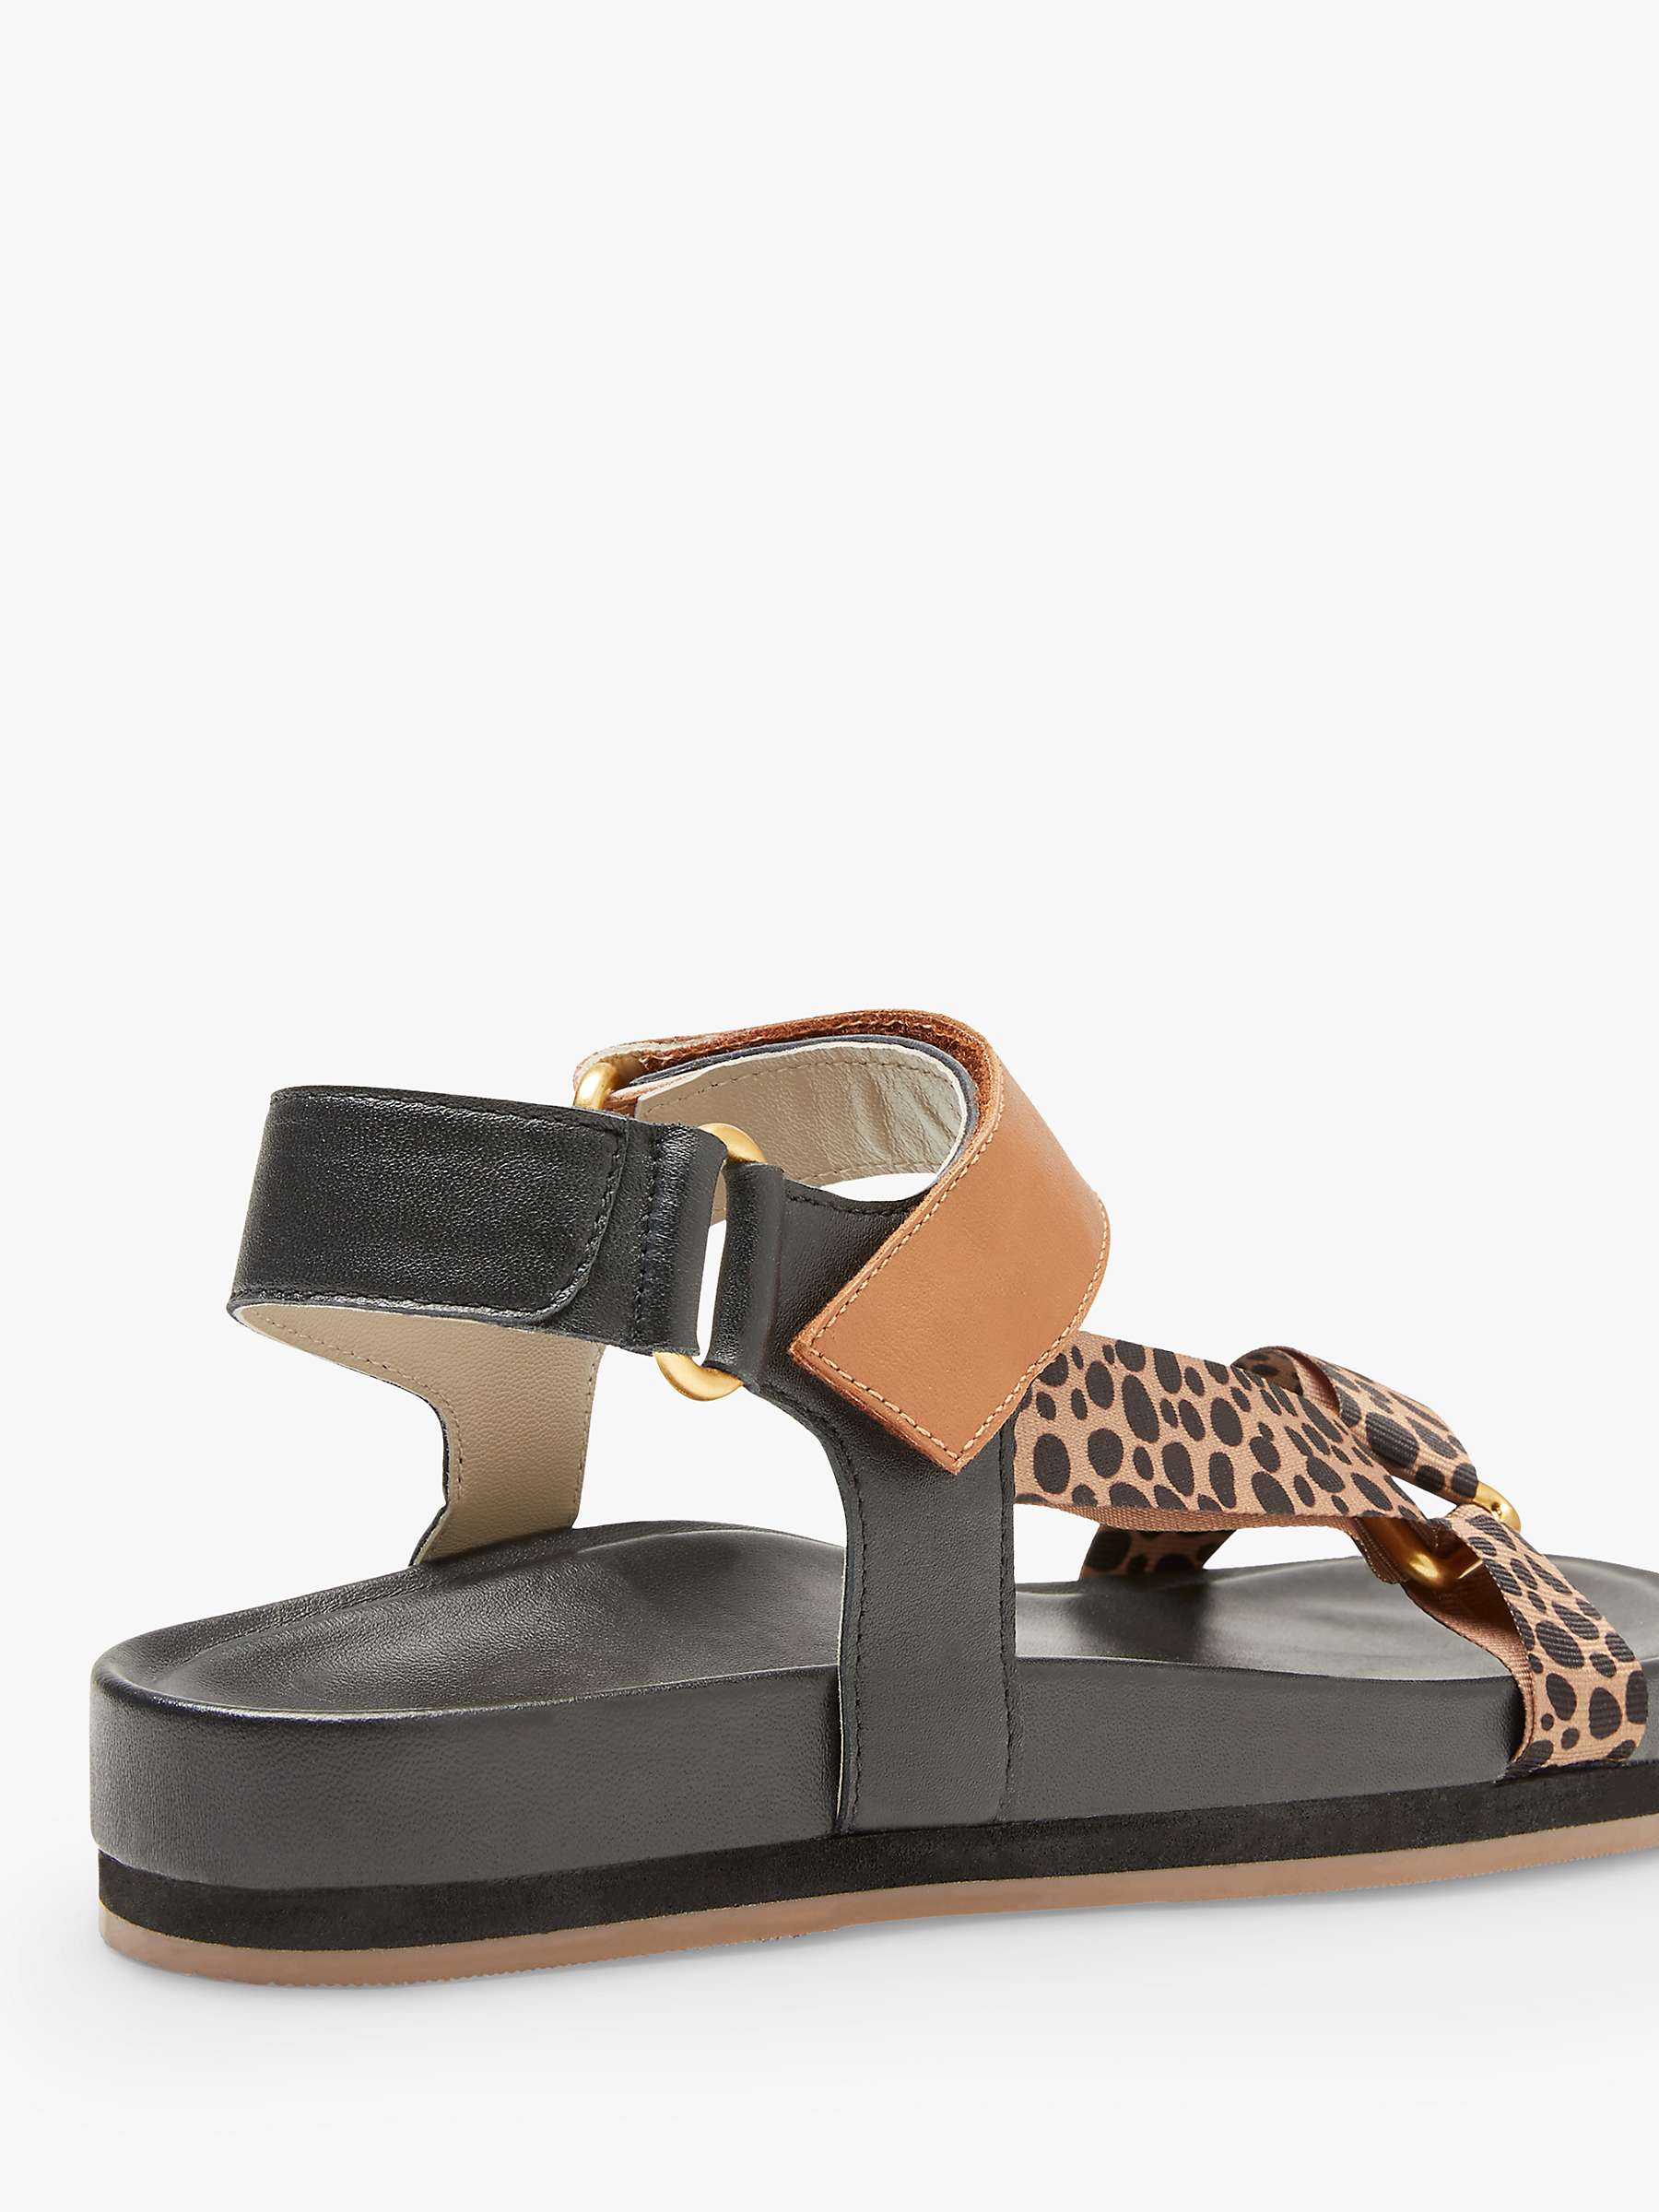 Buy Boden Philomina Sandals, Leopard Online at johnlewis.com